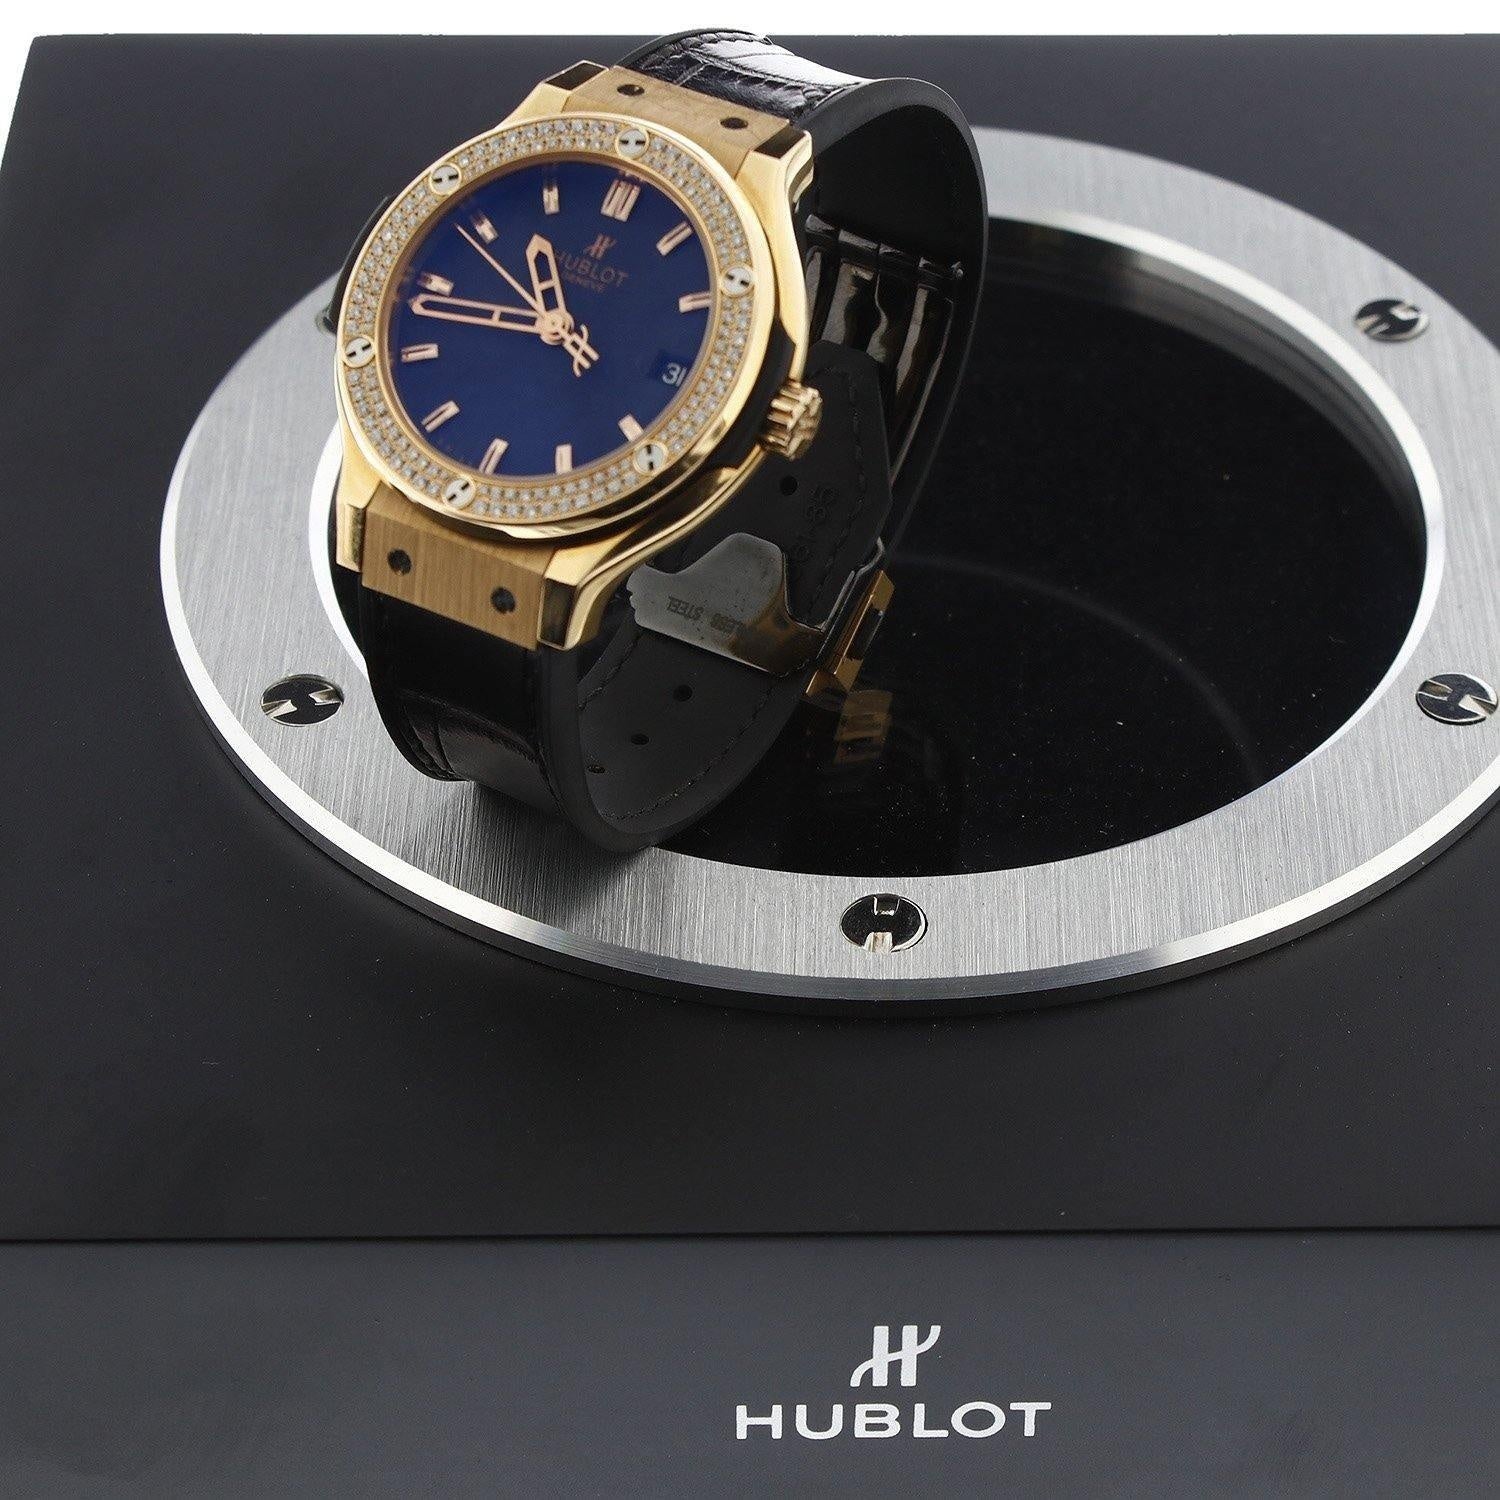 Hublot Classic Fusion Rose Gold with Diamond Bezel On Black Crocodile Strap 561.PX.1180.LR.1104 - Swiss Watch Store UK